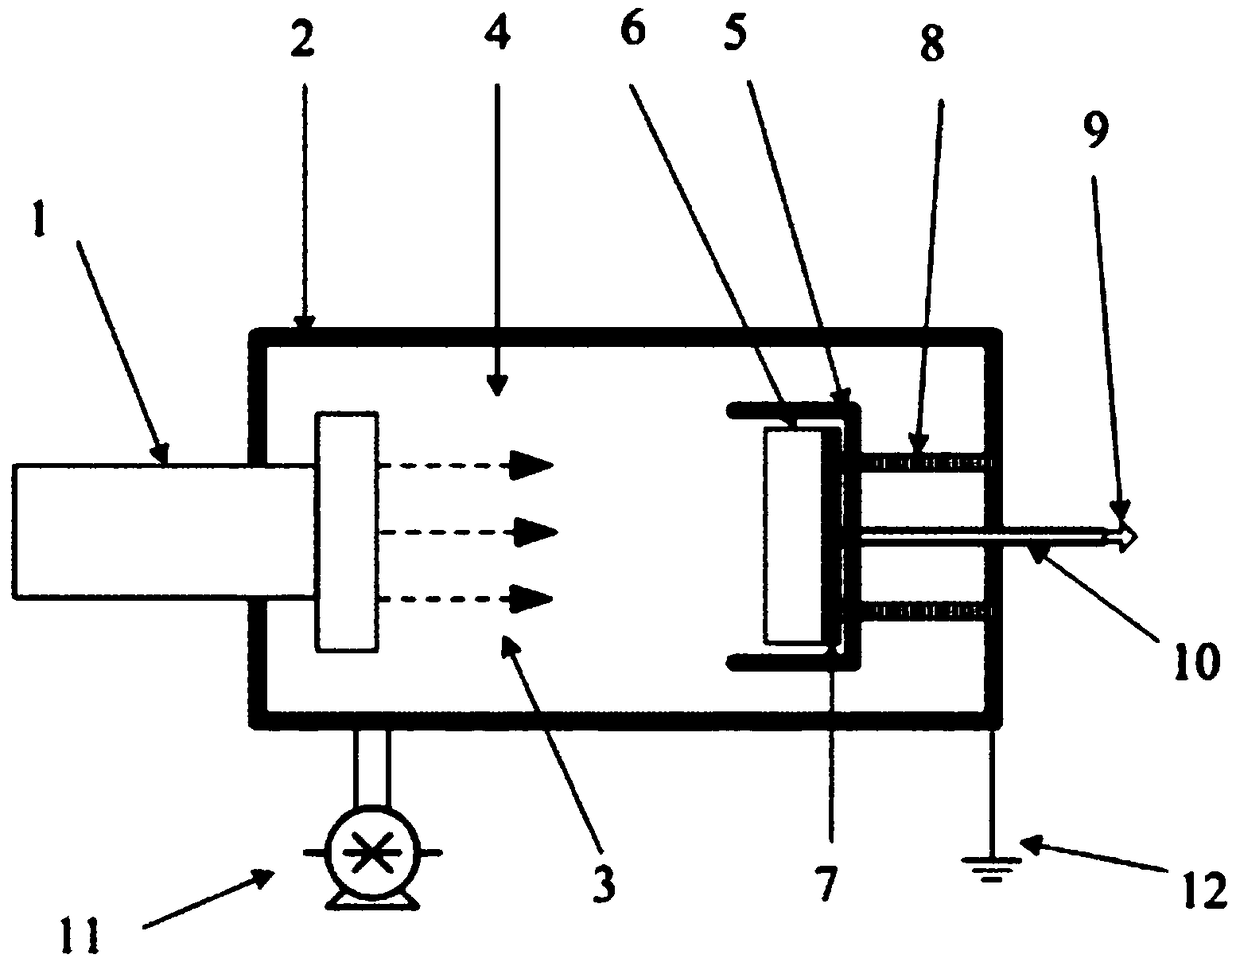 Electron induction based charging/discharging simulation method